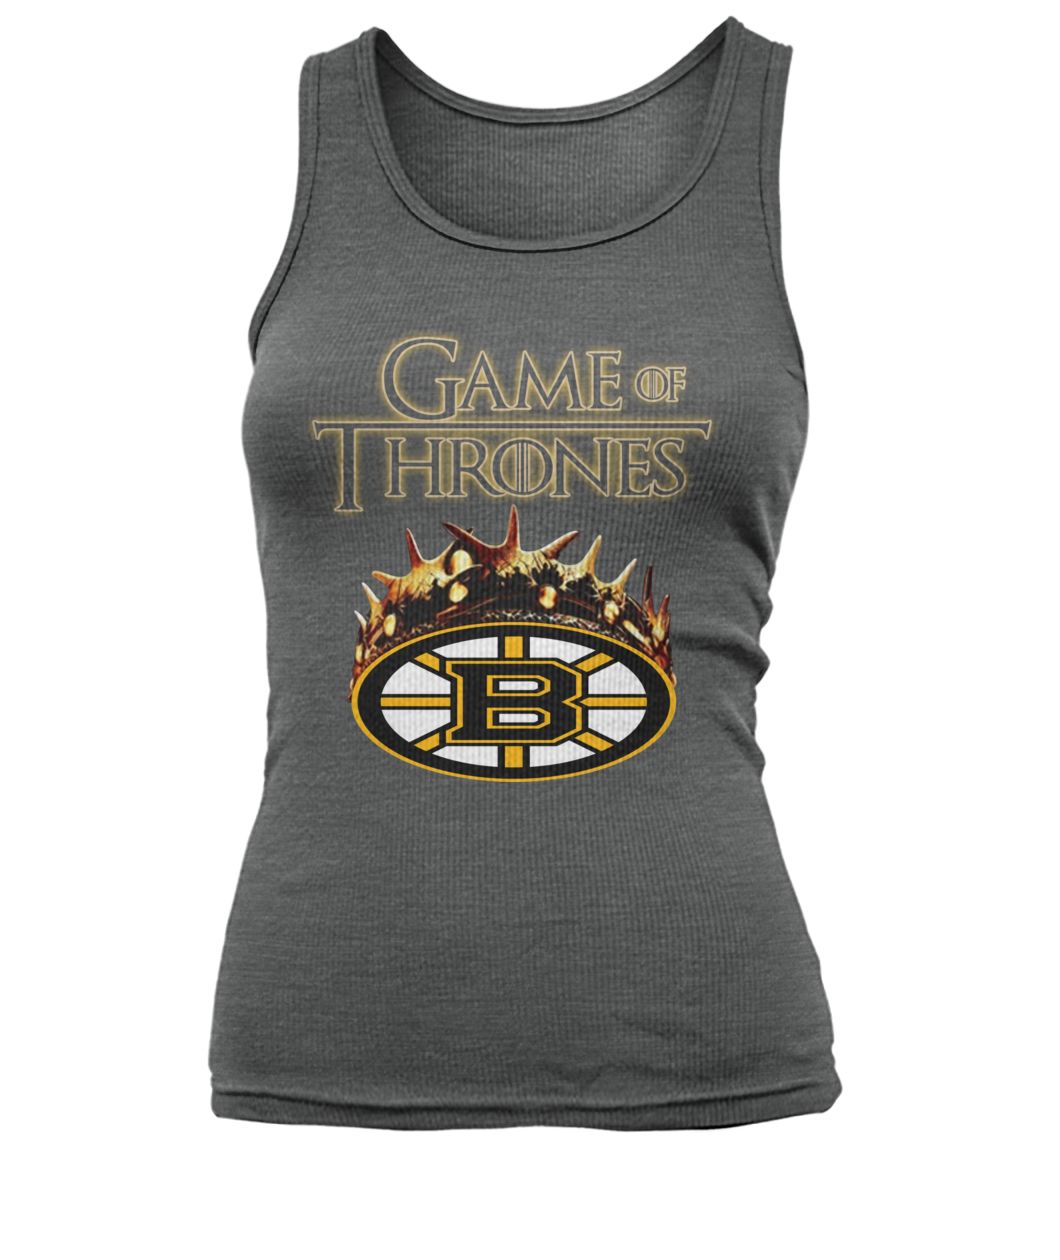 Game of thrones crown boston bruins women's tank top